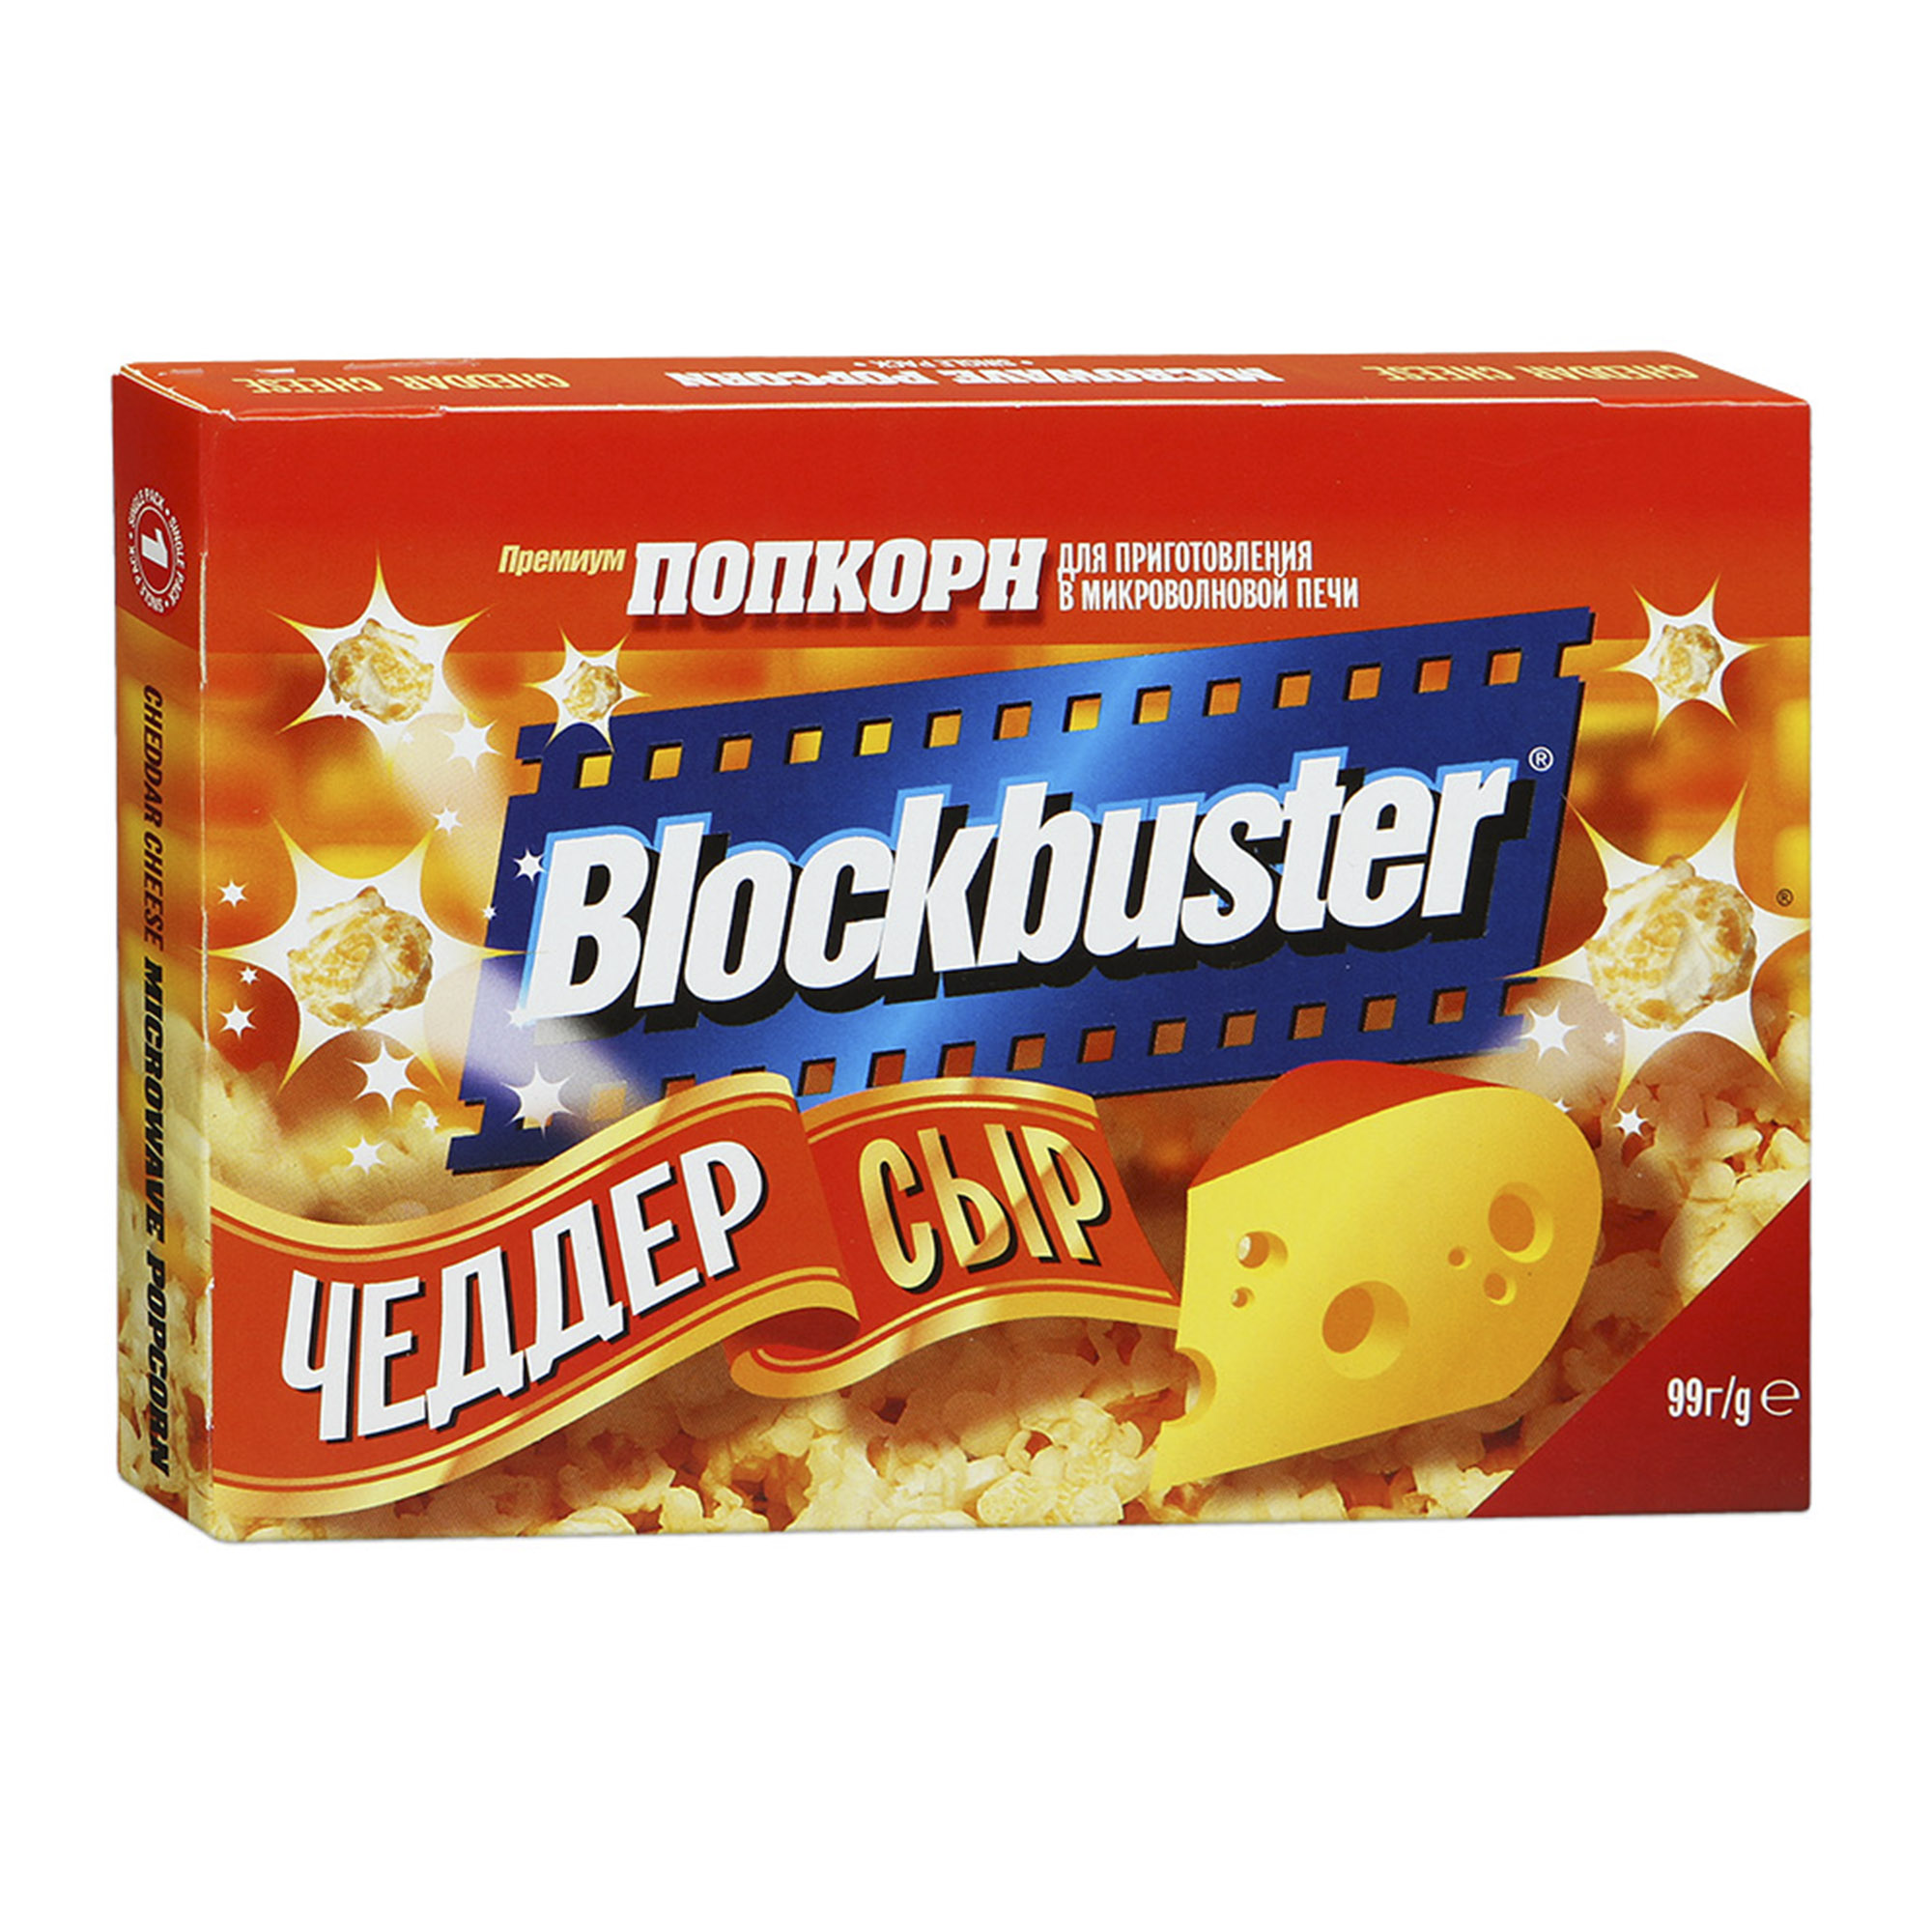 Попкорн Blockbuster с сыром Чеддер 90 г